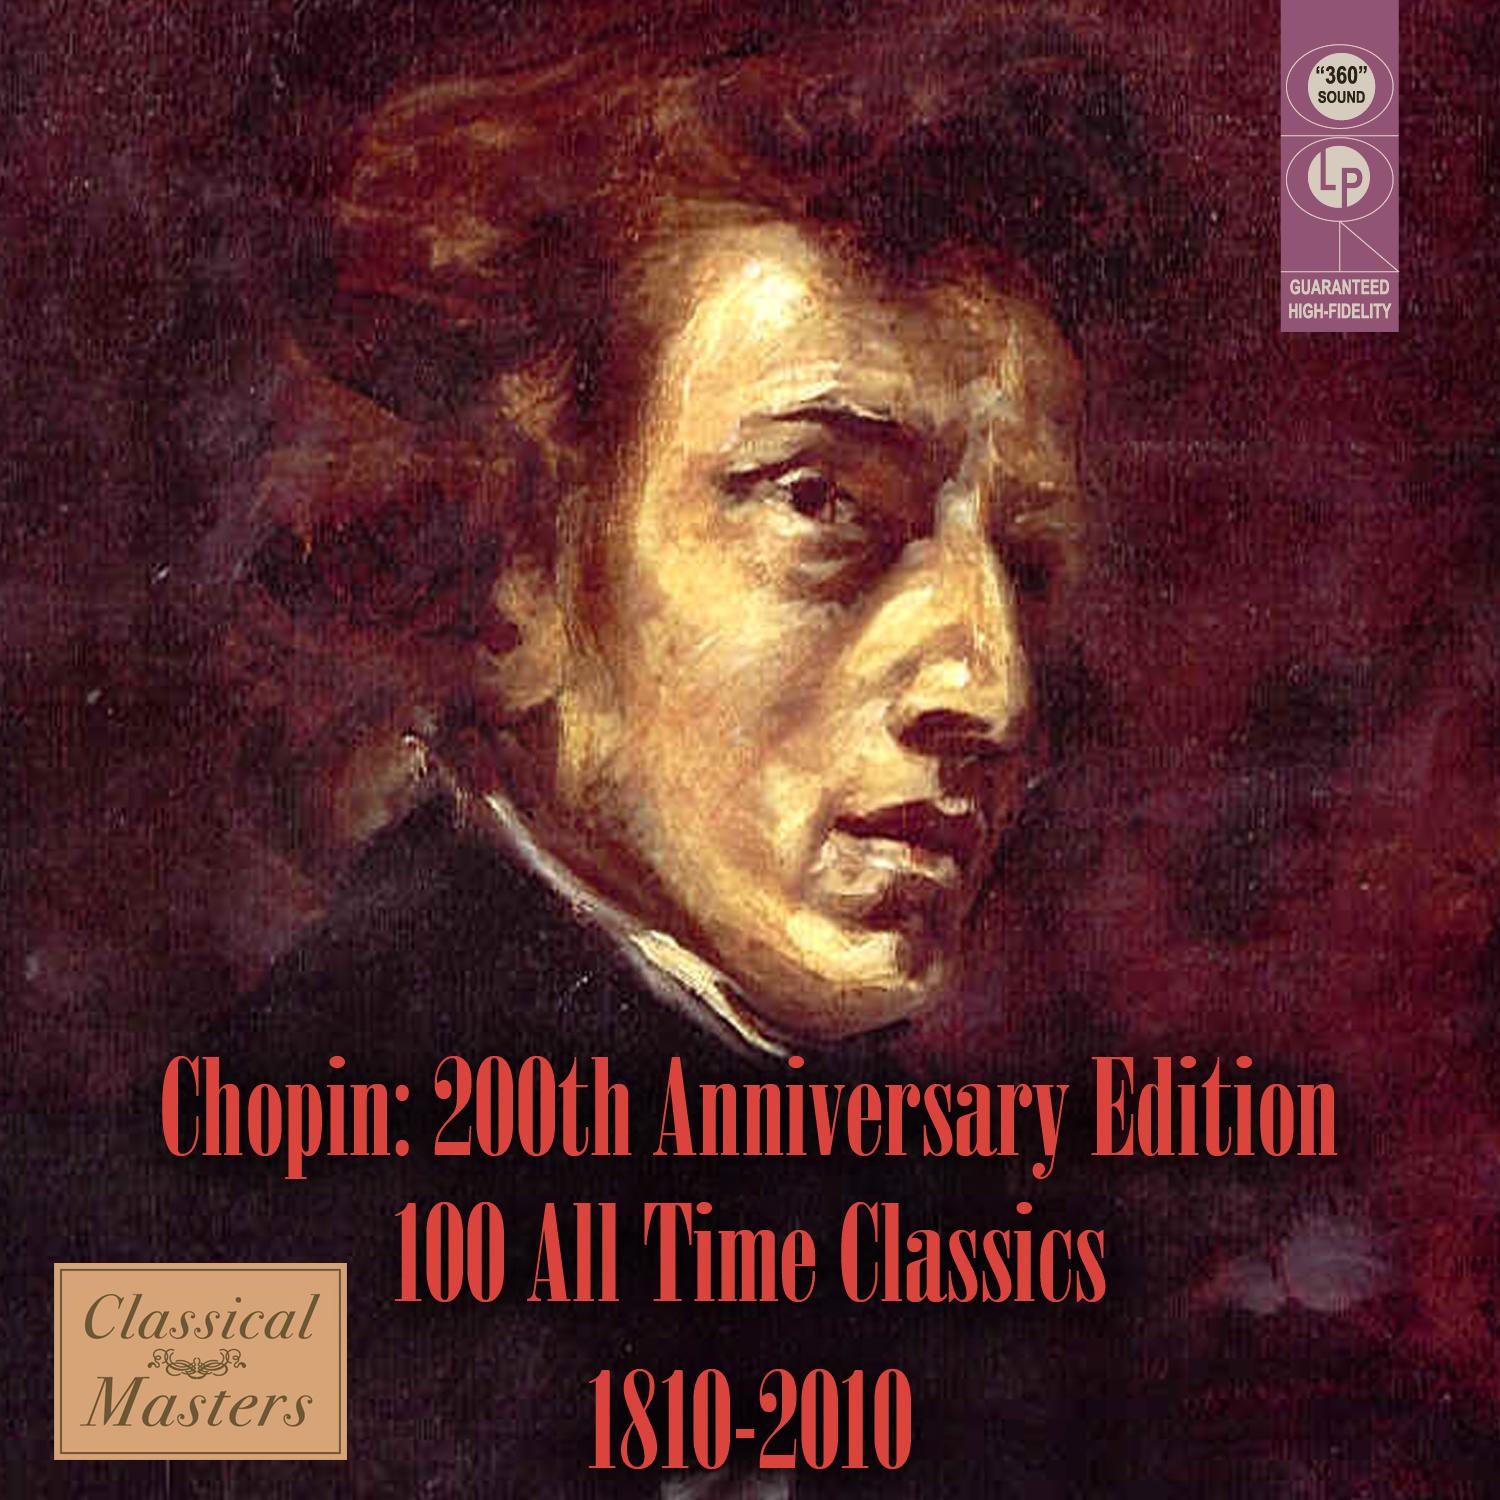 Chopin: 200th Anniversary Edition - 100 All-Time Classics 1810-2010